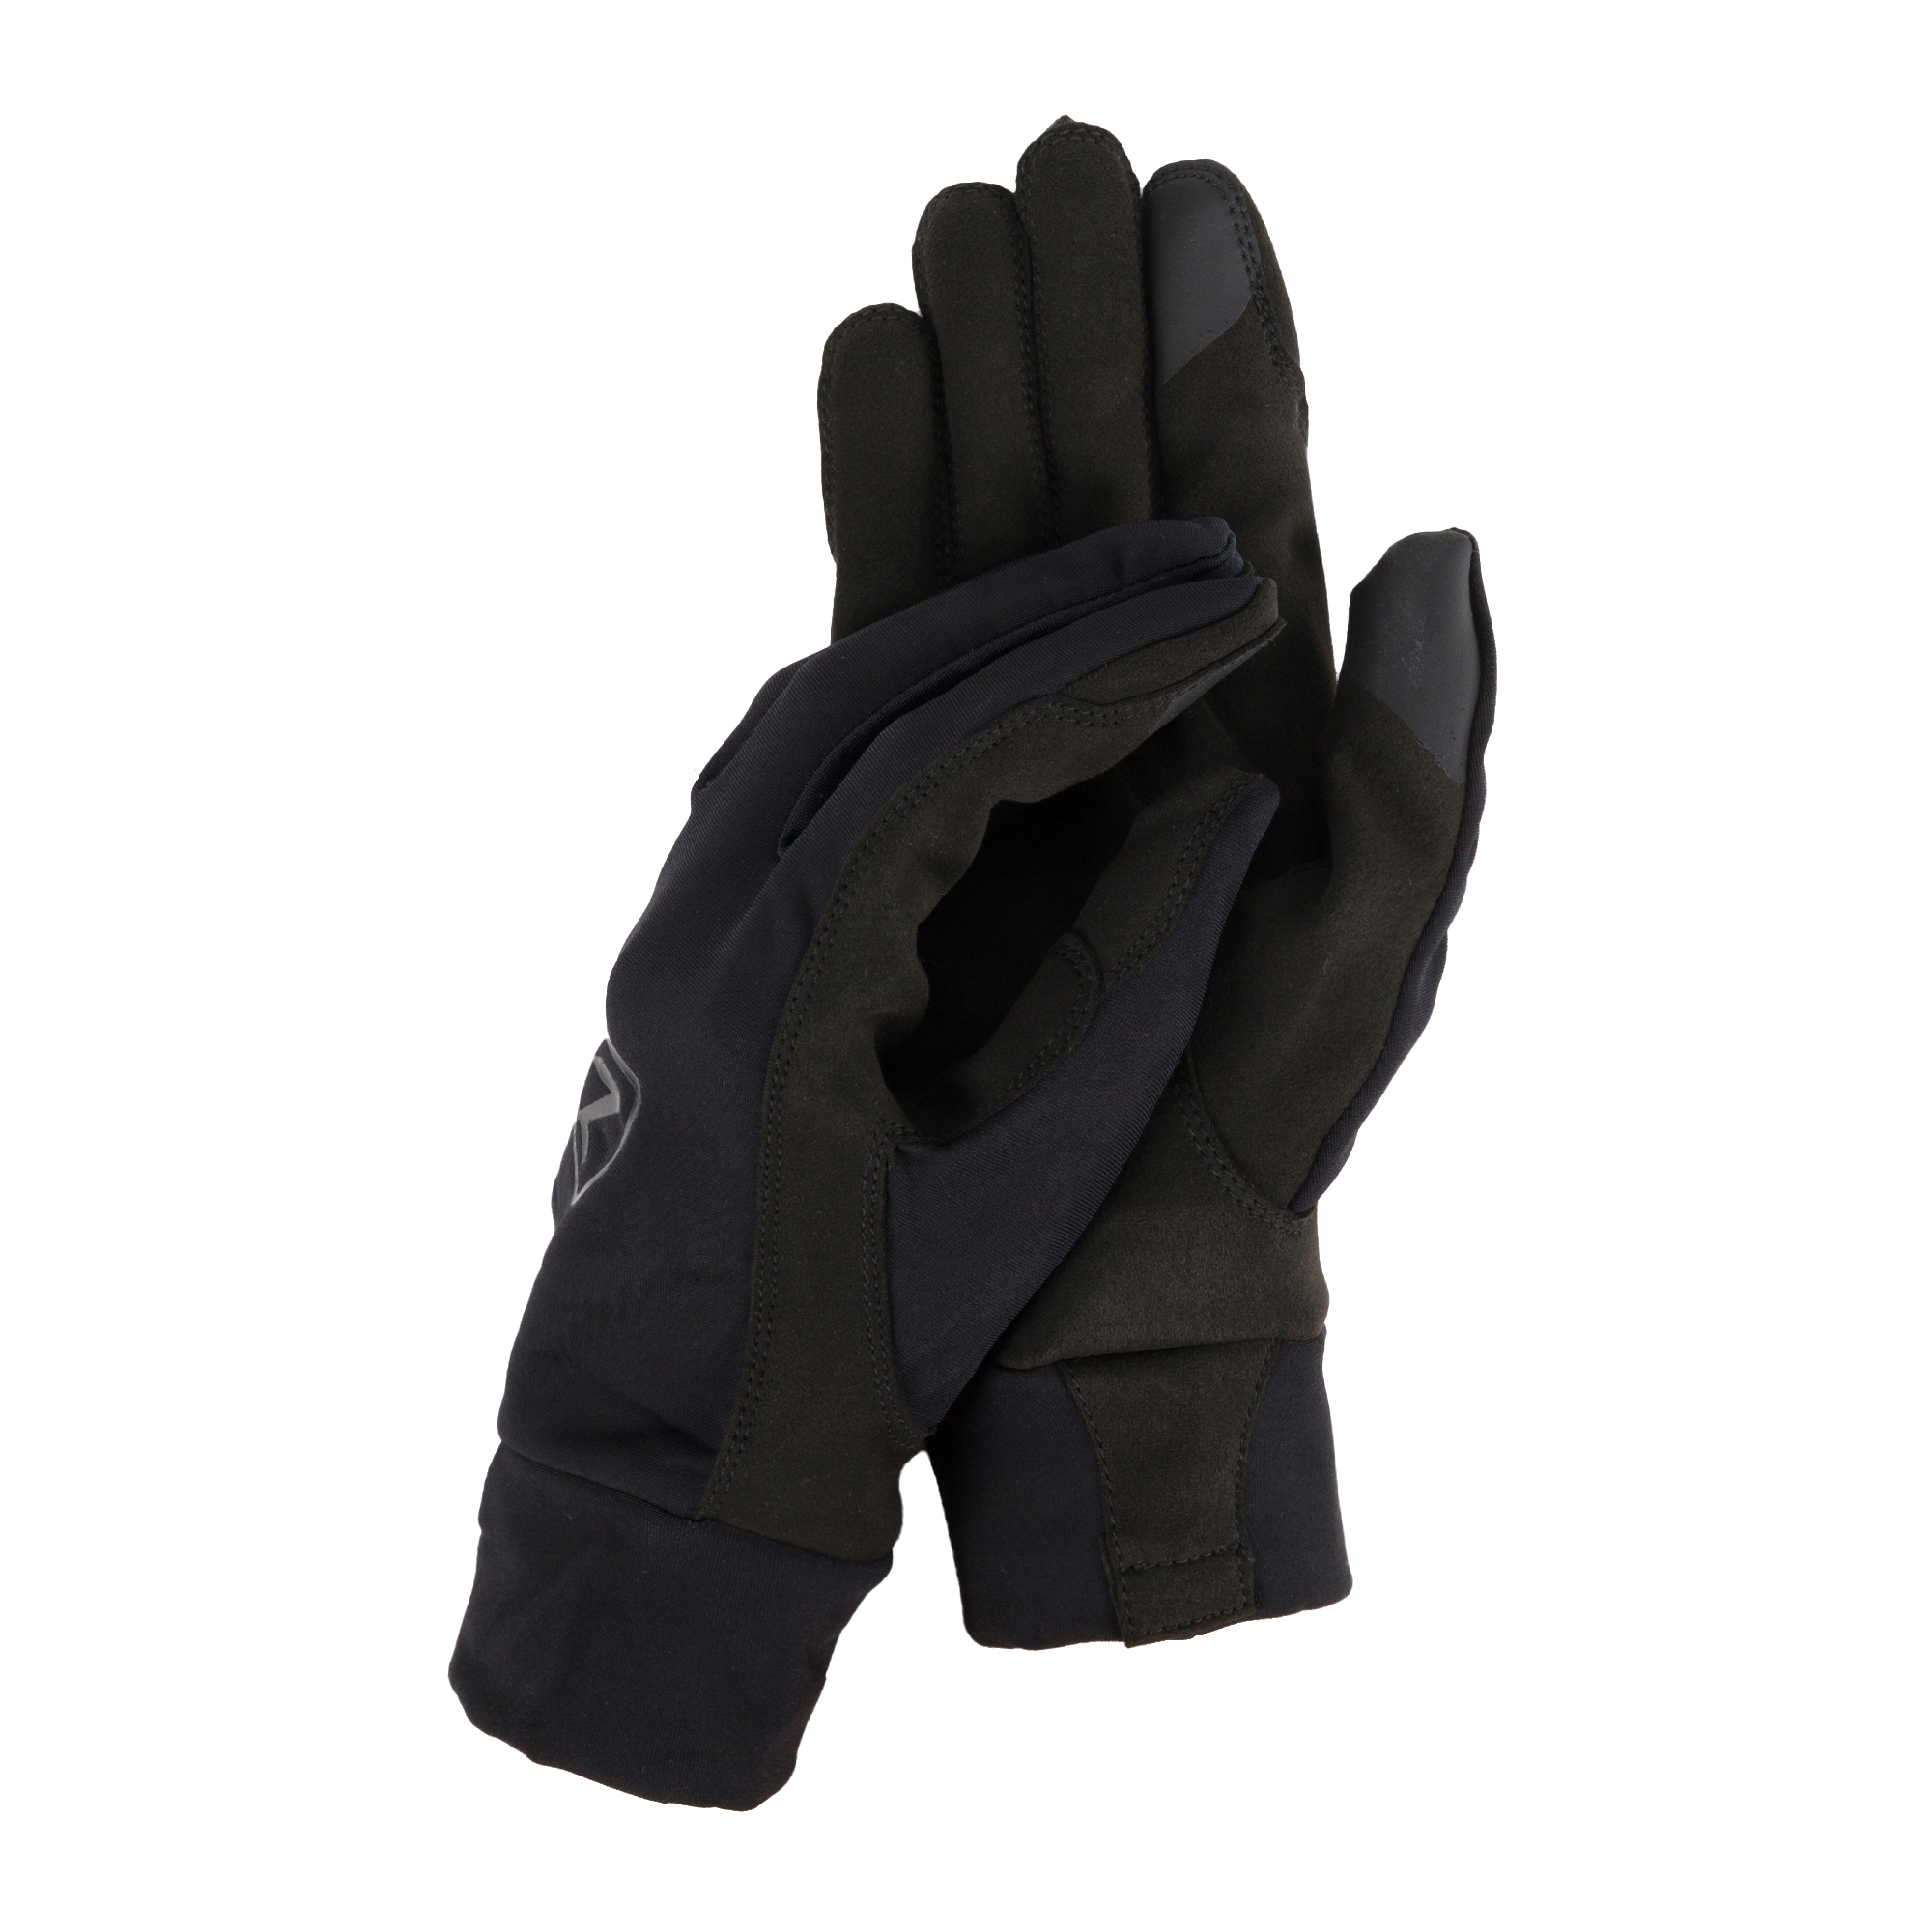 Rękawice skiturowe ZIENER Gysmo Touch czarne 10 (25.40 cm) - 801409.12 -  14392276294